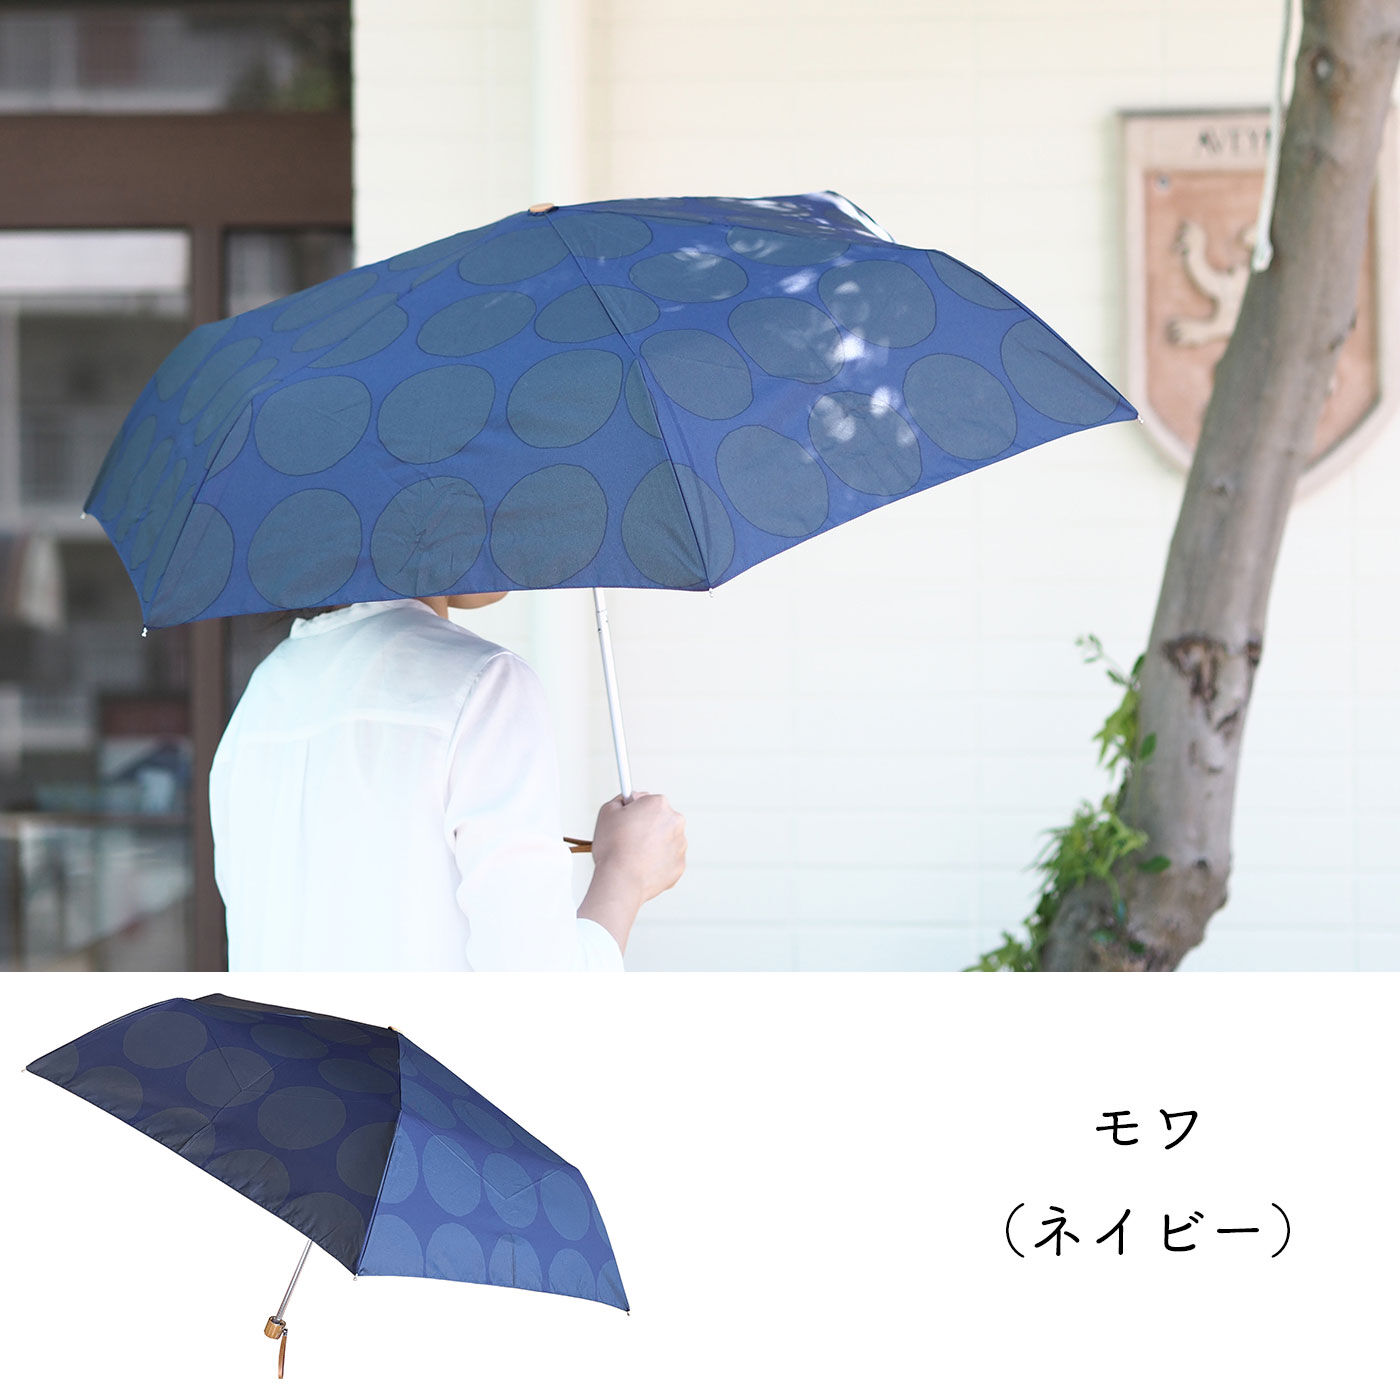 FELISSIMO PARTNERS|雨ふる日々が楽しみになるんるん♪晴雨兼用の軽量スリムな折りたたみ傘